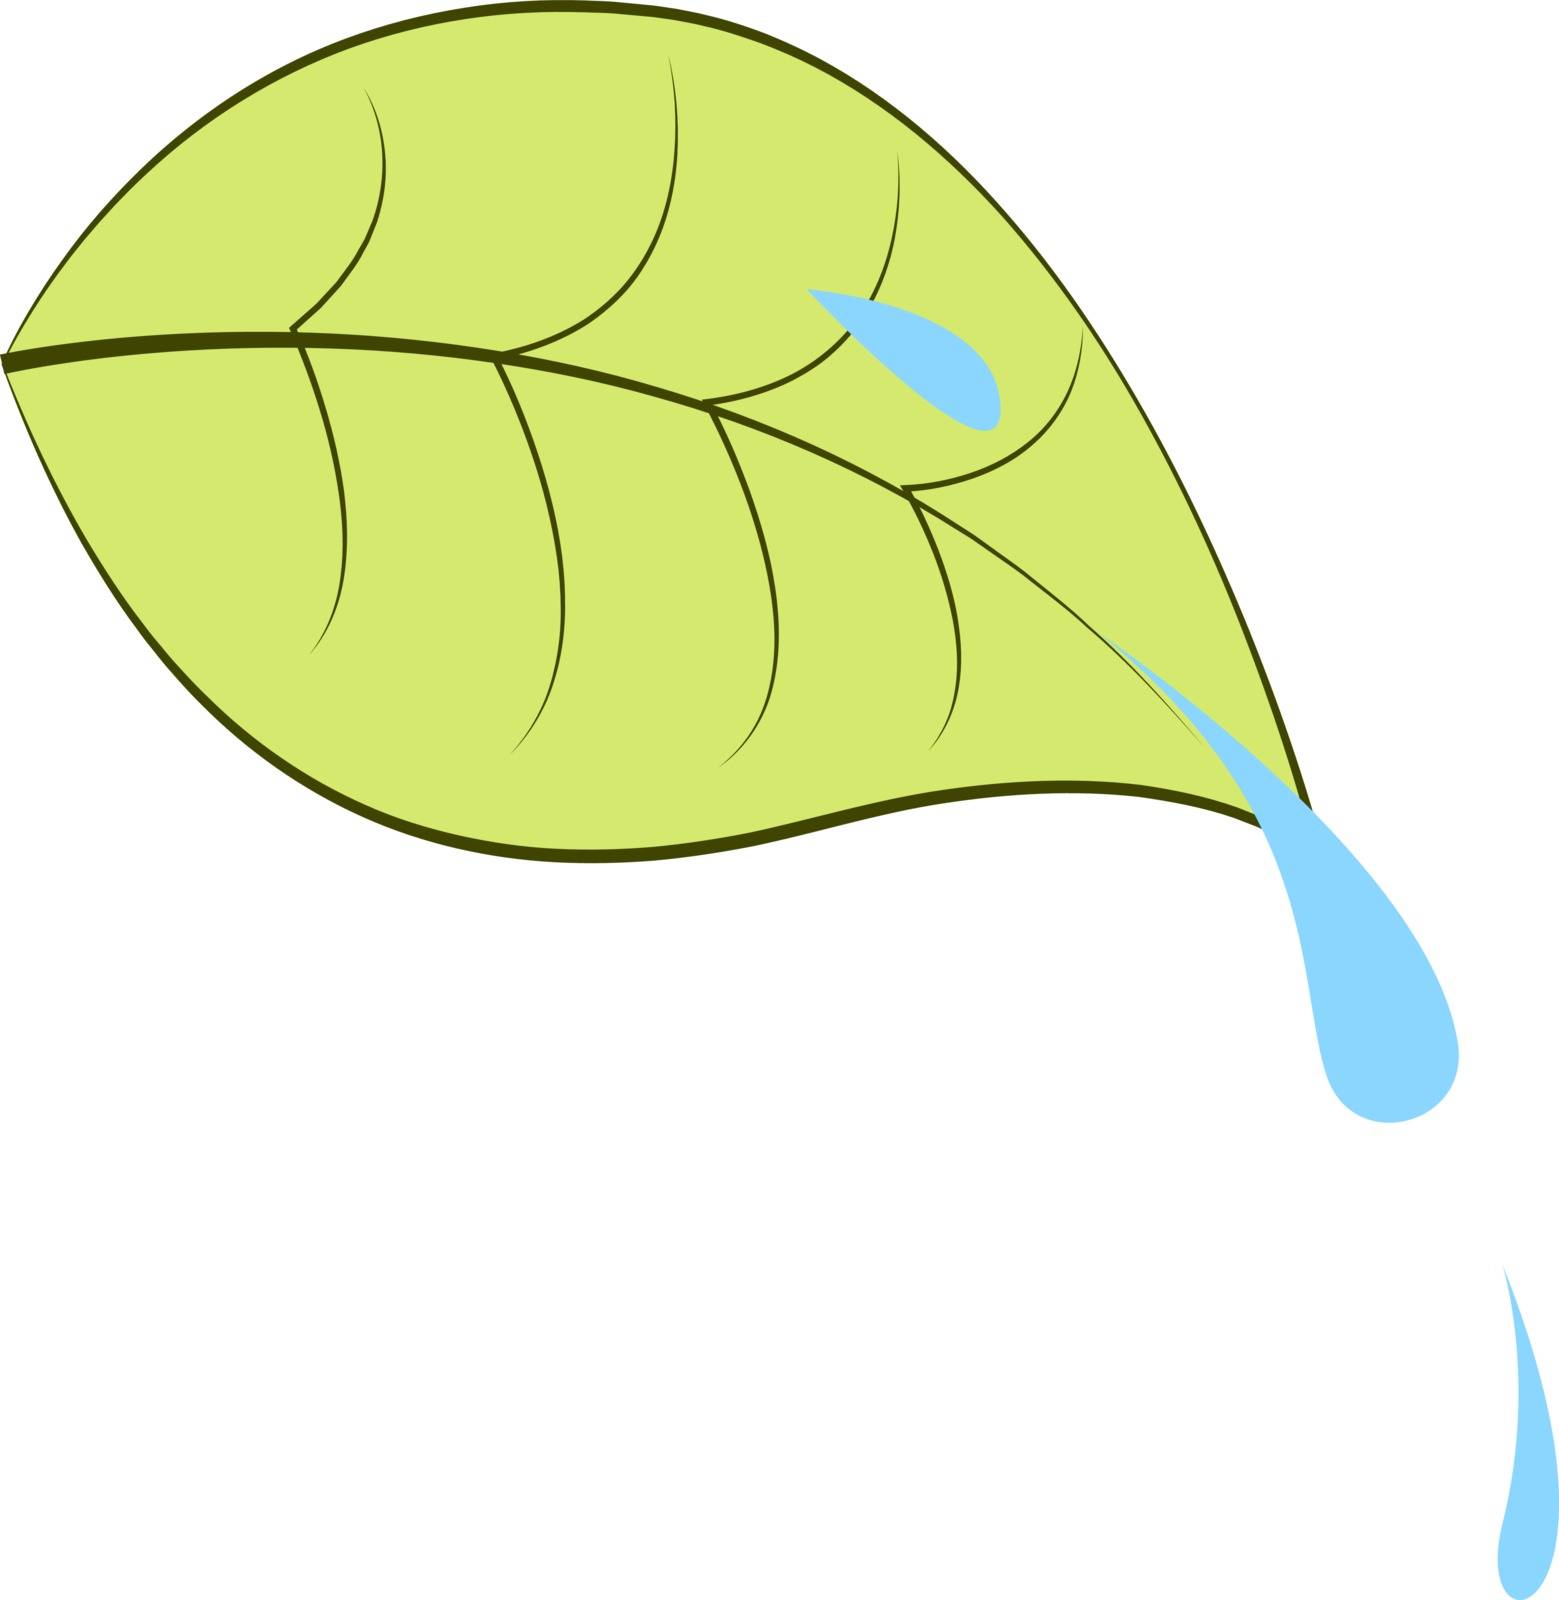 Morning dew, illustration, vector on white background. by Morphart